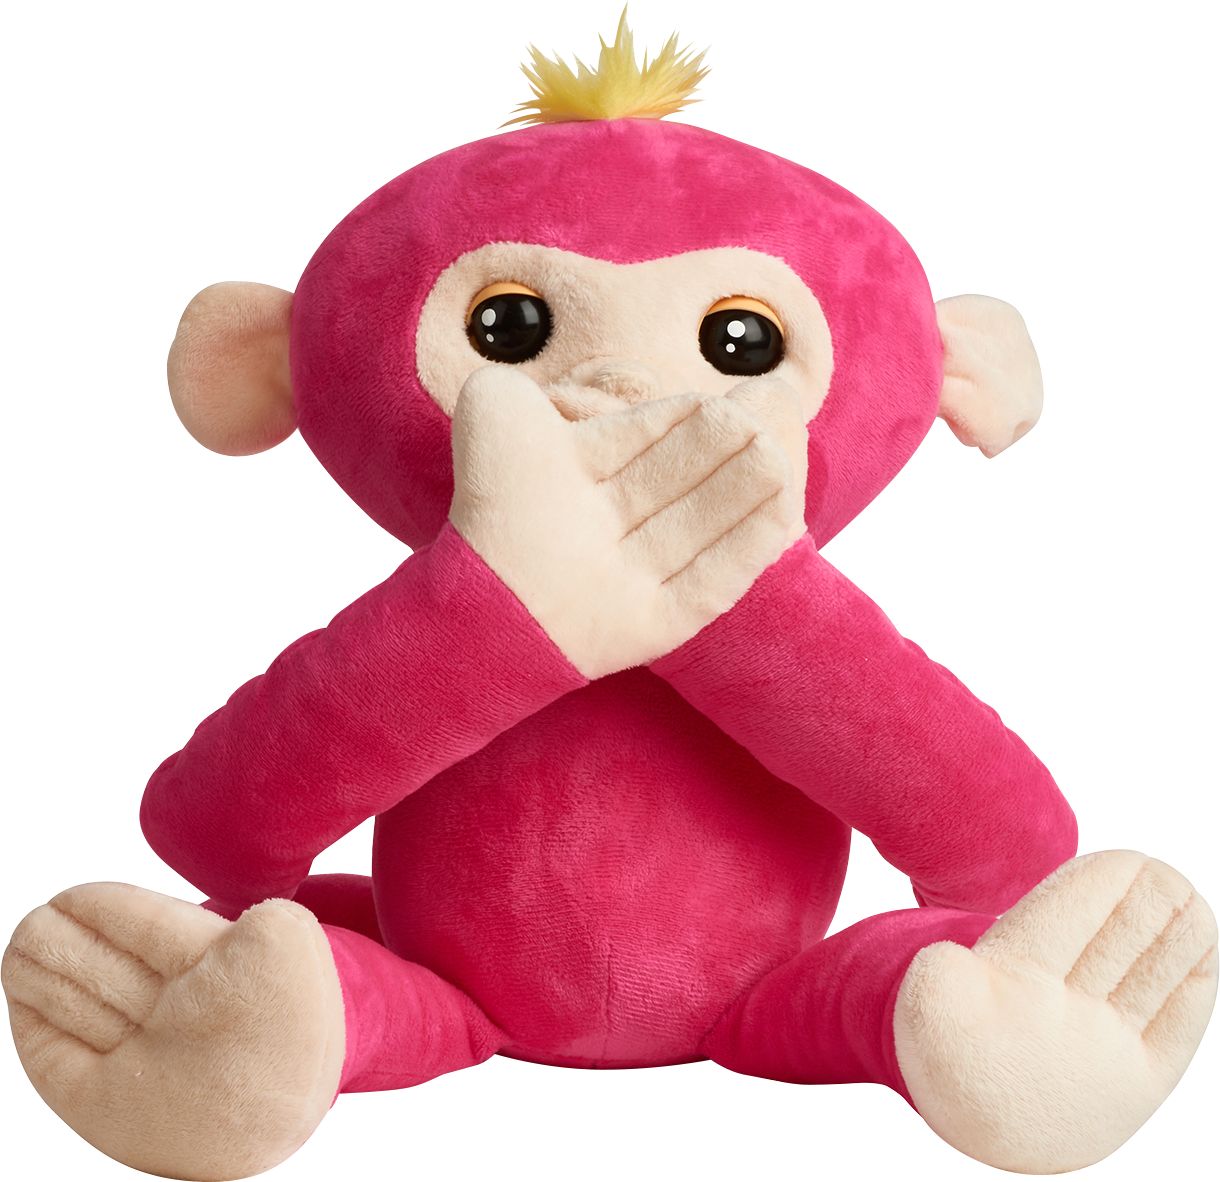 Fingerlings Hugs Bella Pink Monkey Plush Interactive Toy 40 Sounds WowWee for sale online